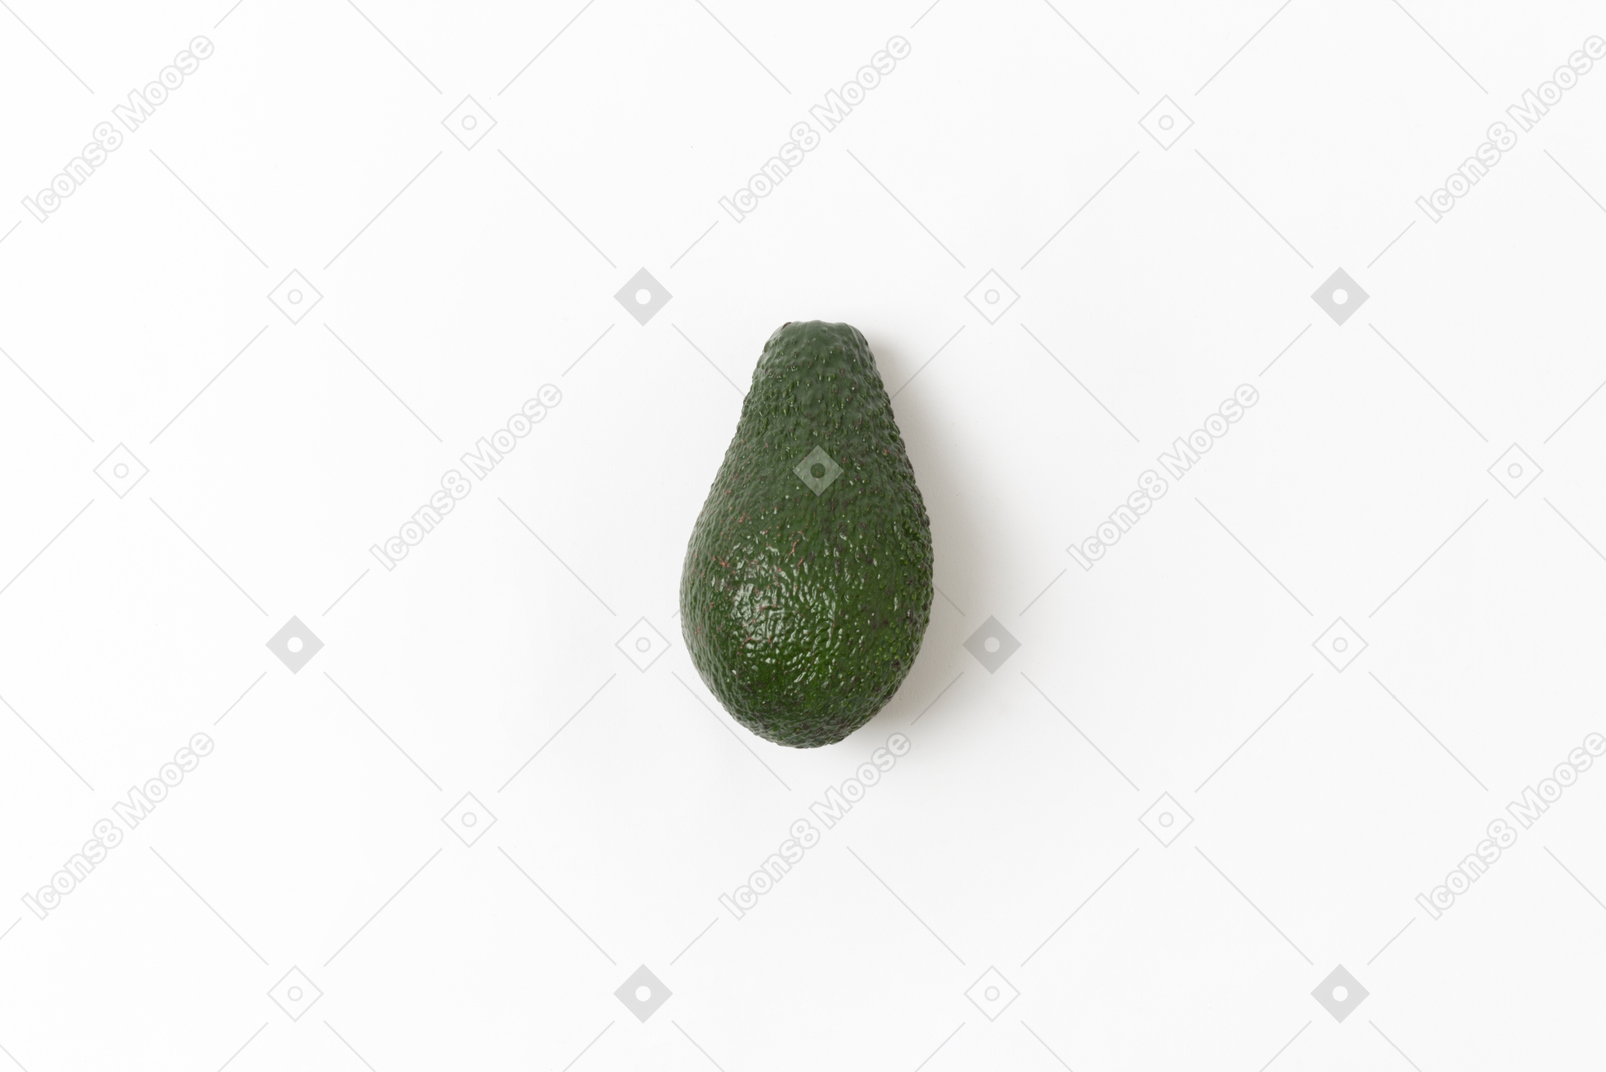 A lot of vitamines hide in avocado